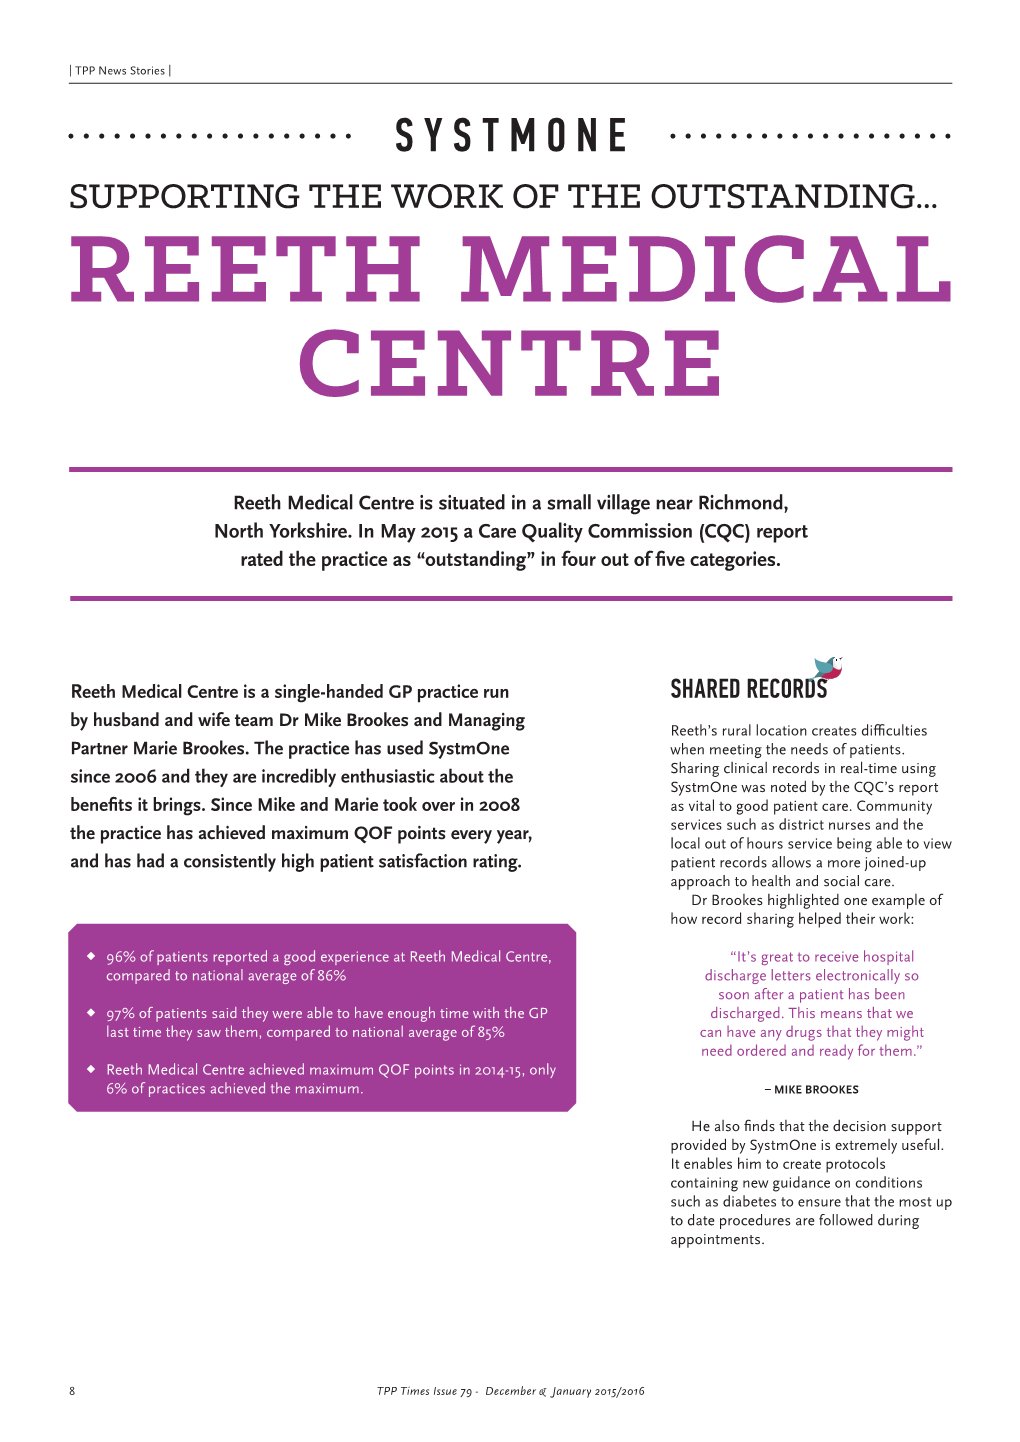 Reeth Medical Centre Case Study